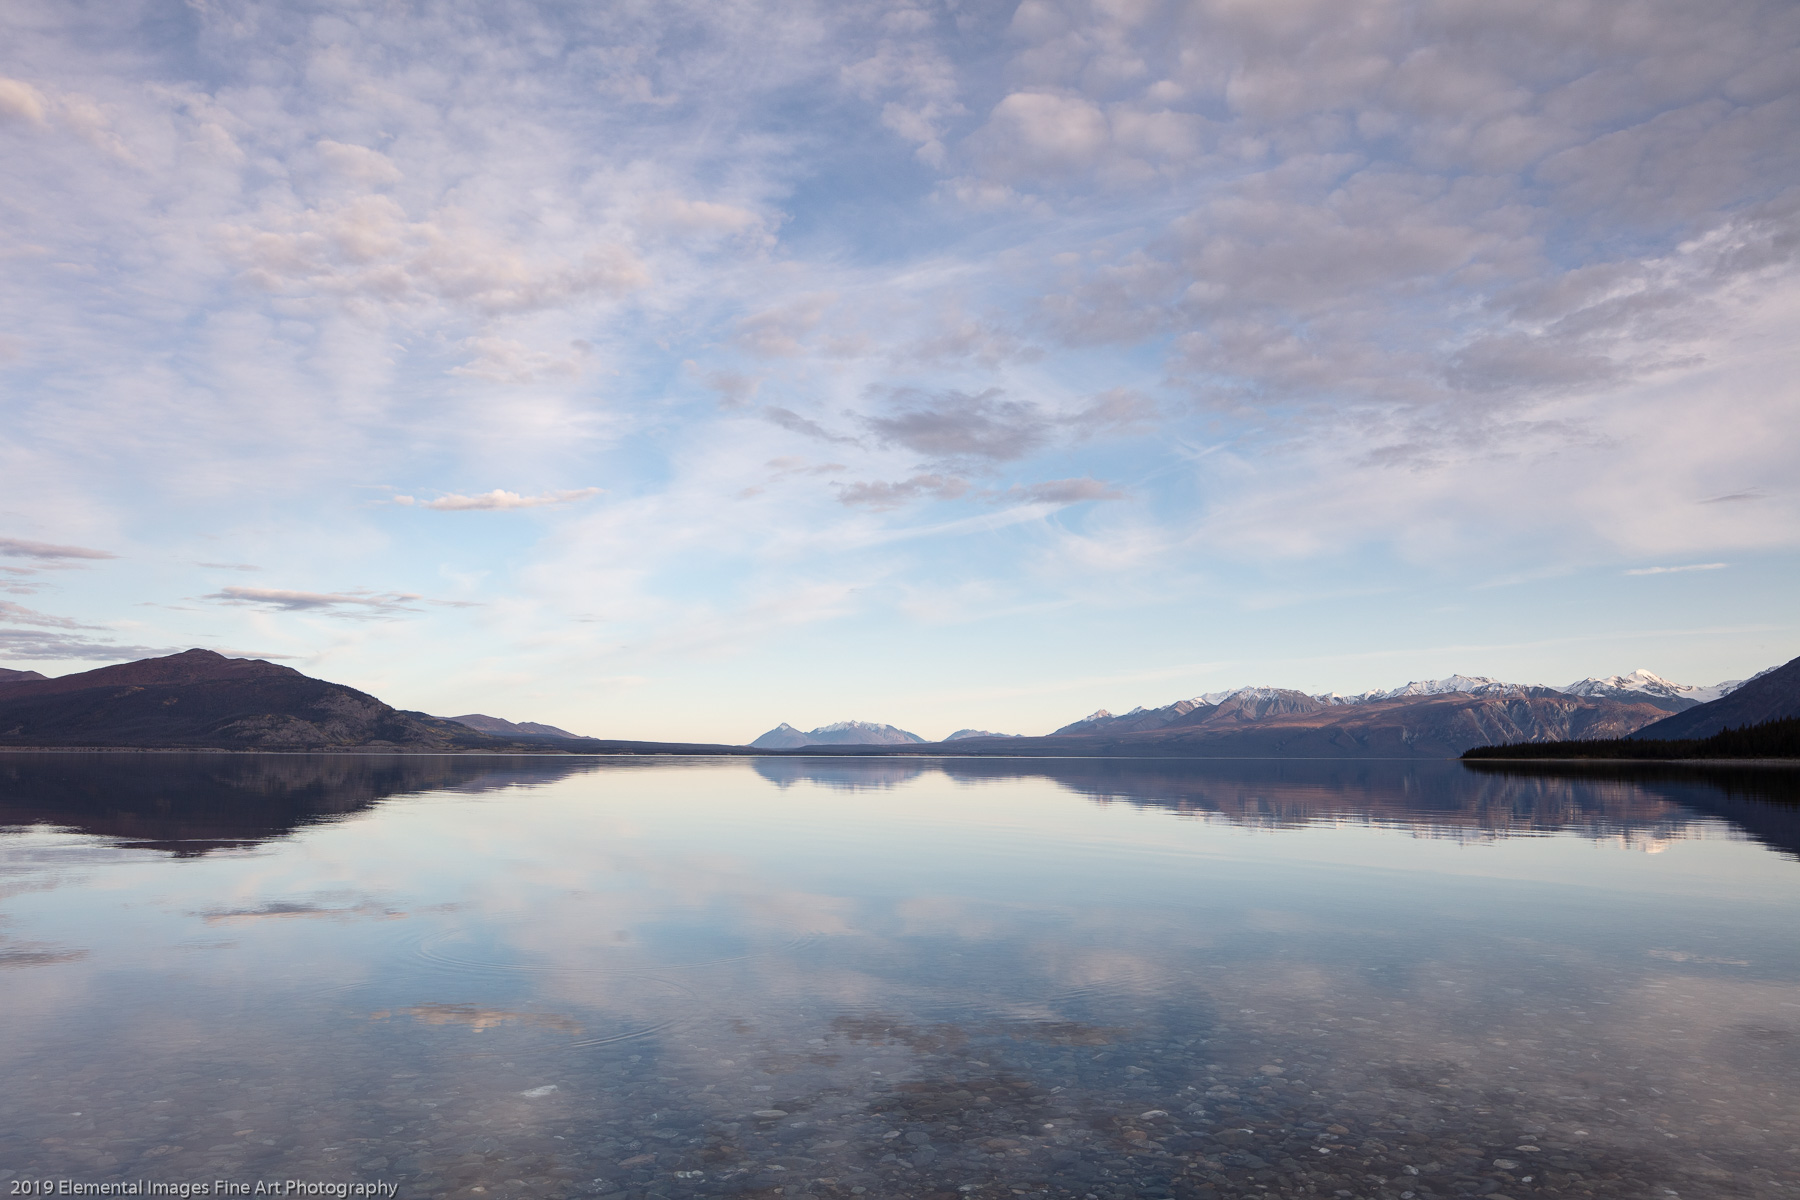 Kluane Lake Pastel | Kluane Lake | YT | Canada - © 2019 Elemental Images Fine Art Photography - All Rights Reserved Worldwide